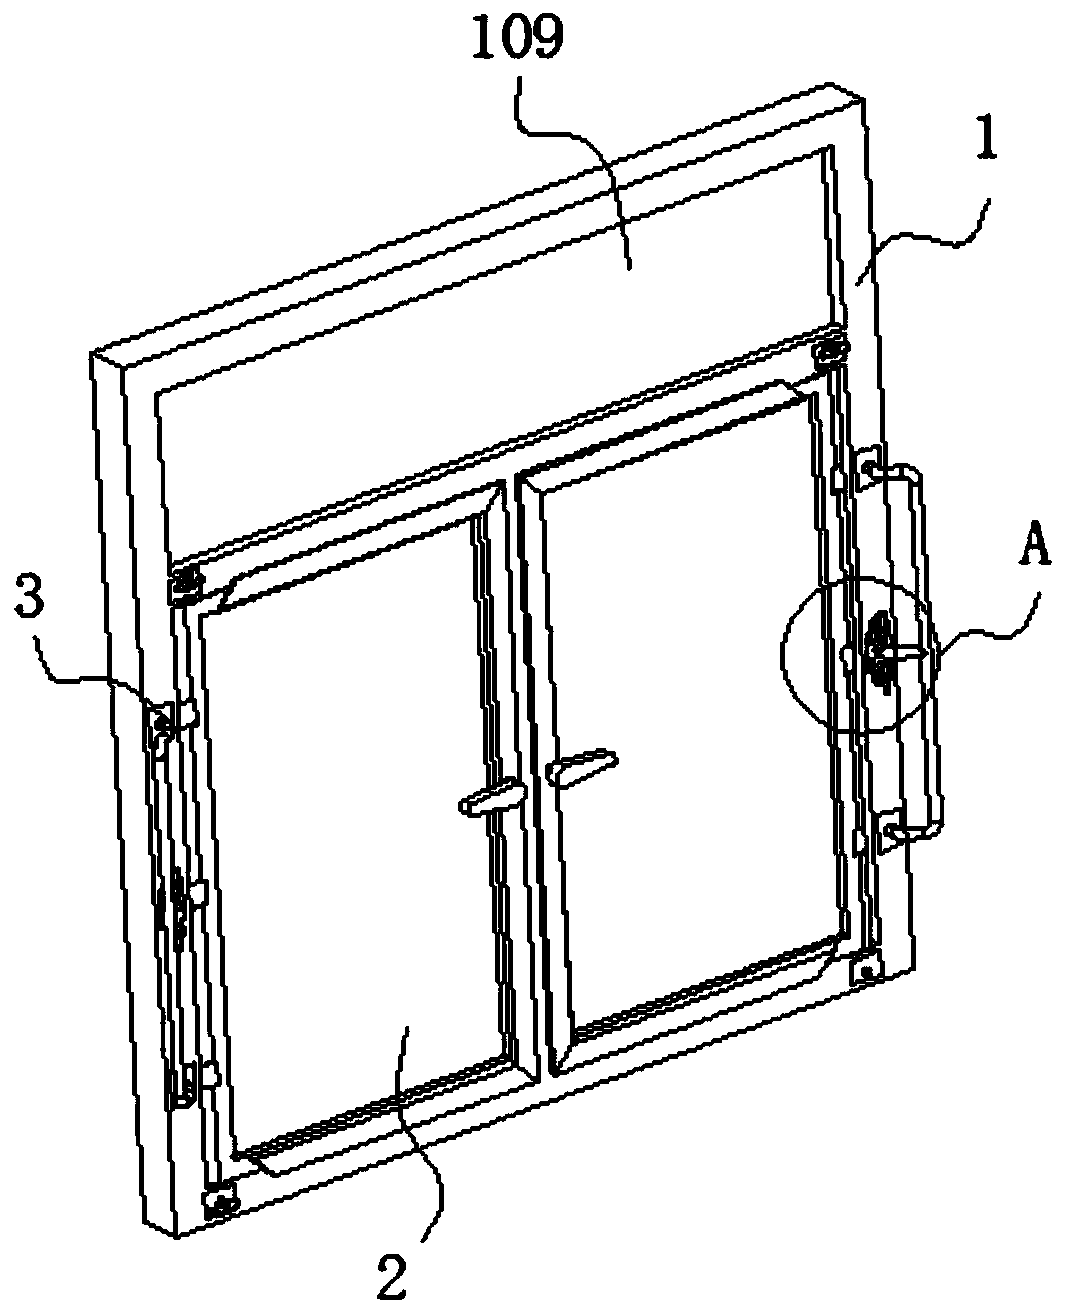 Convenient-to-dismount aluminum alloy fireproof window